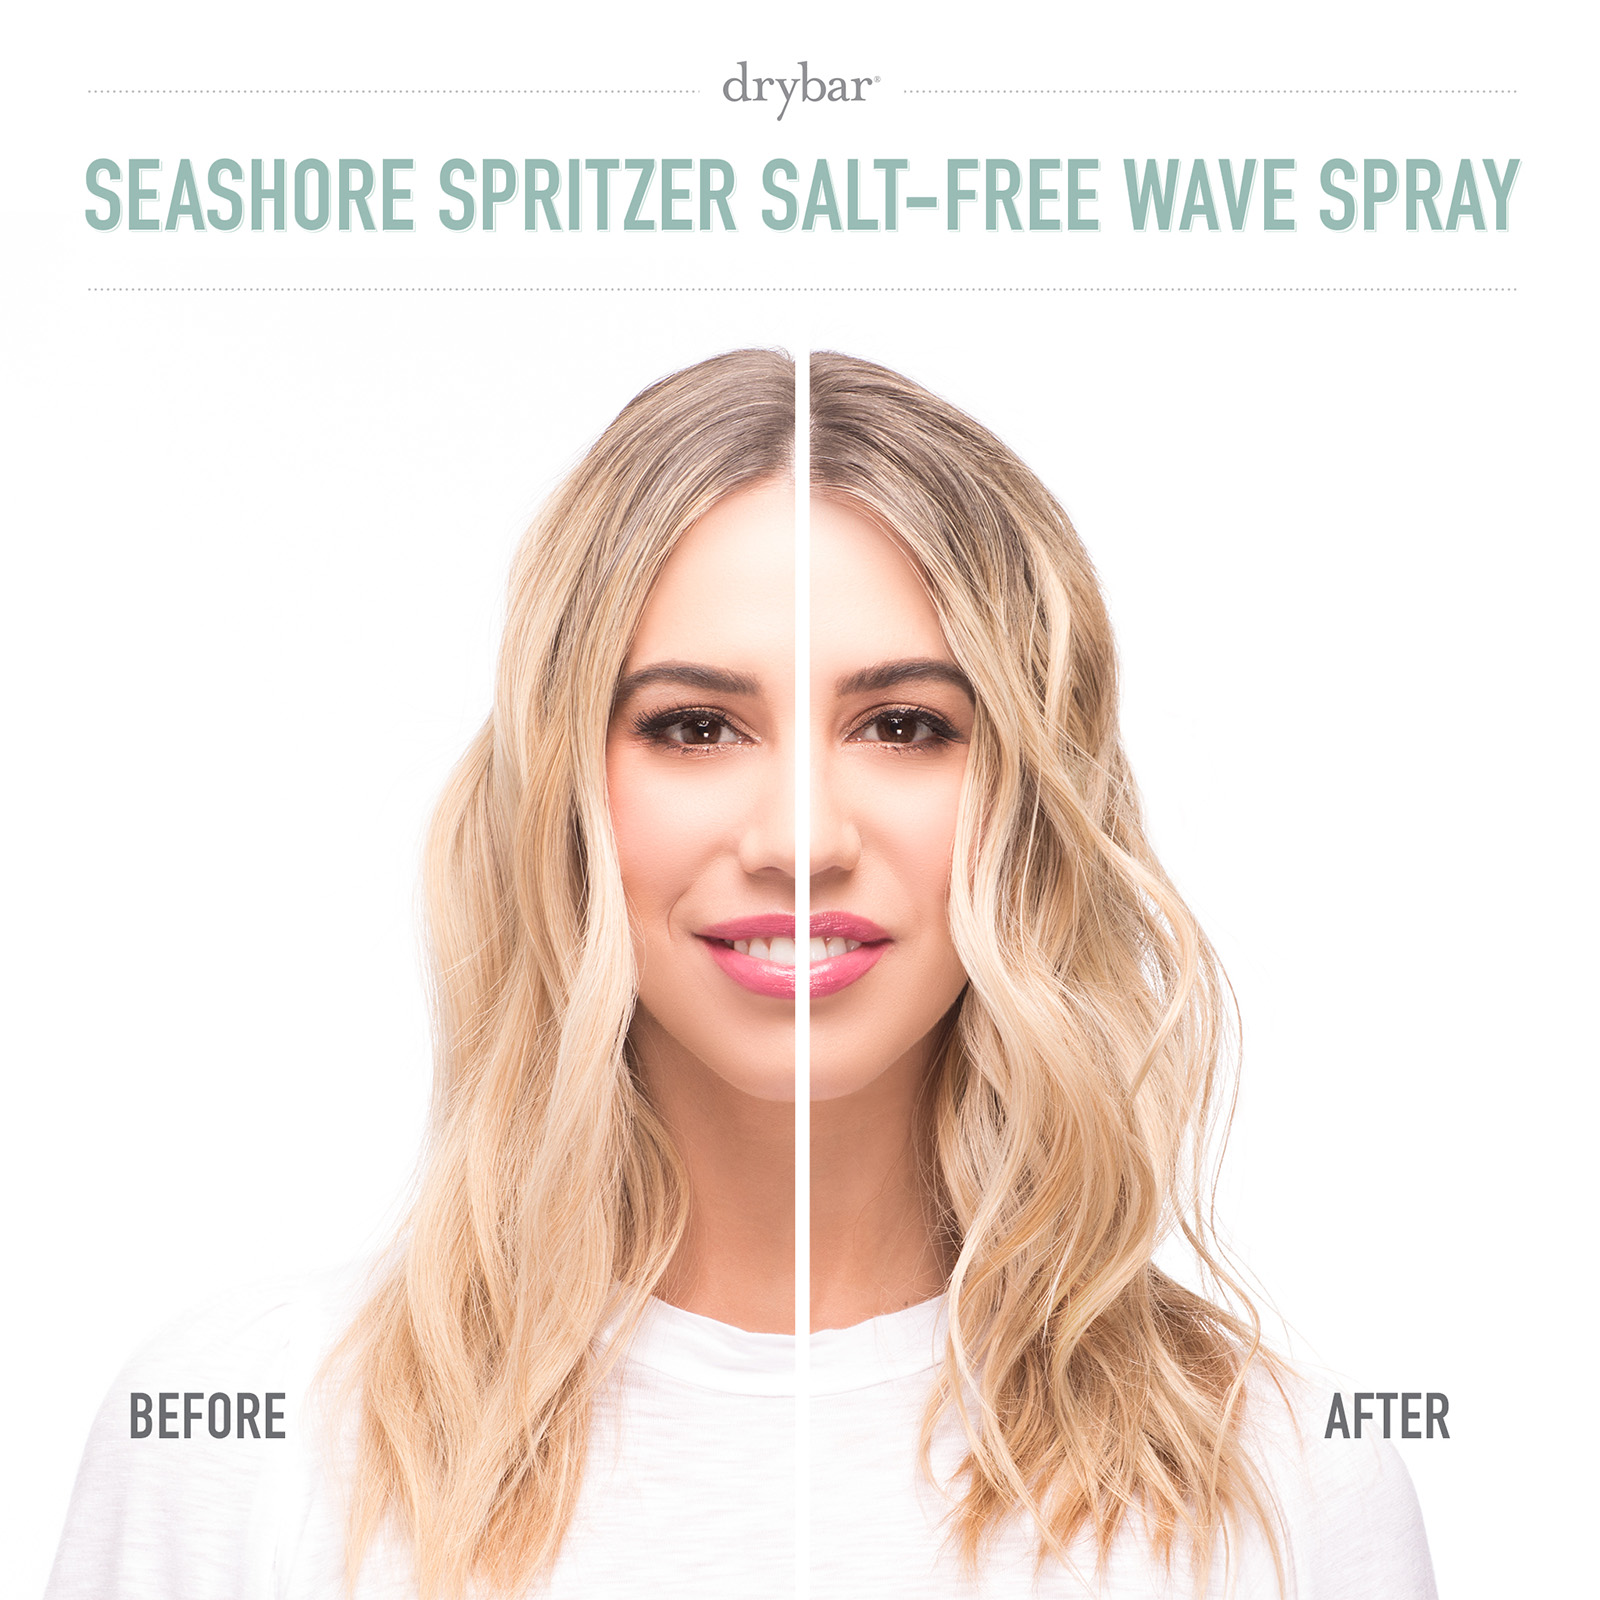 dyrbar seashore spritzer salt-free wave spray before/after